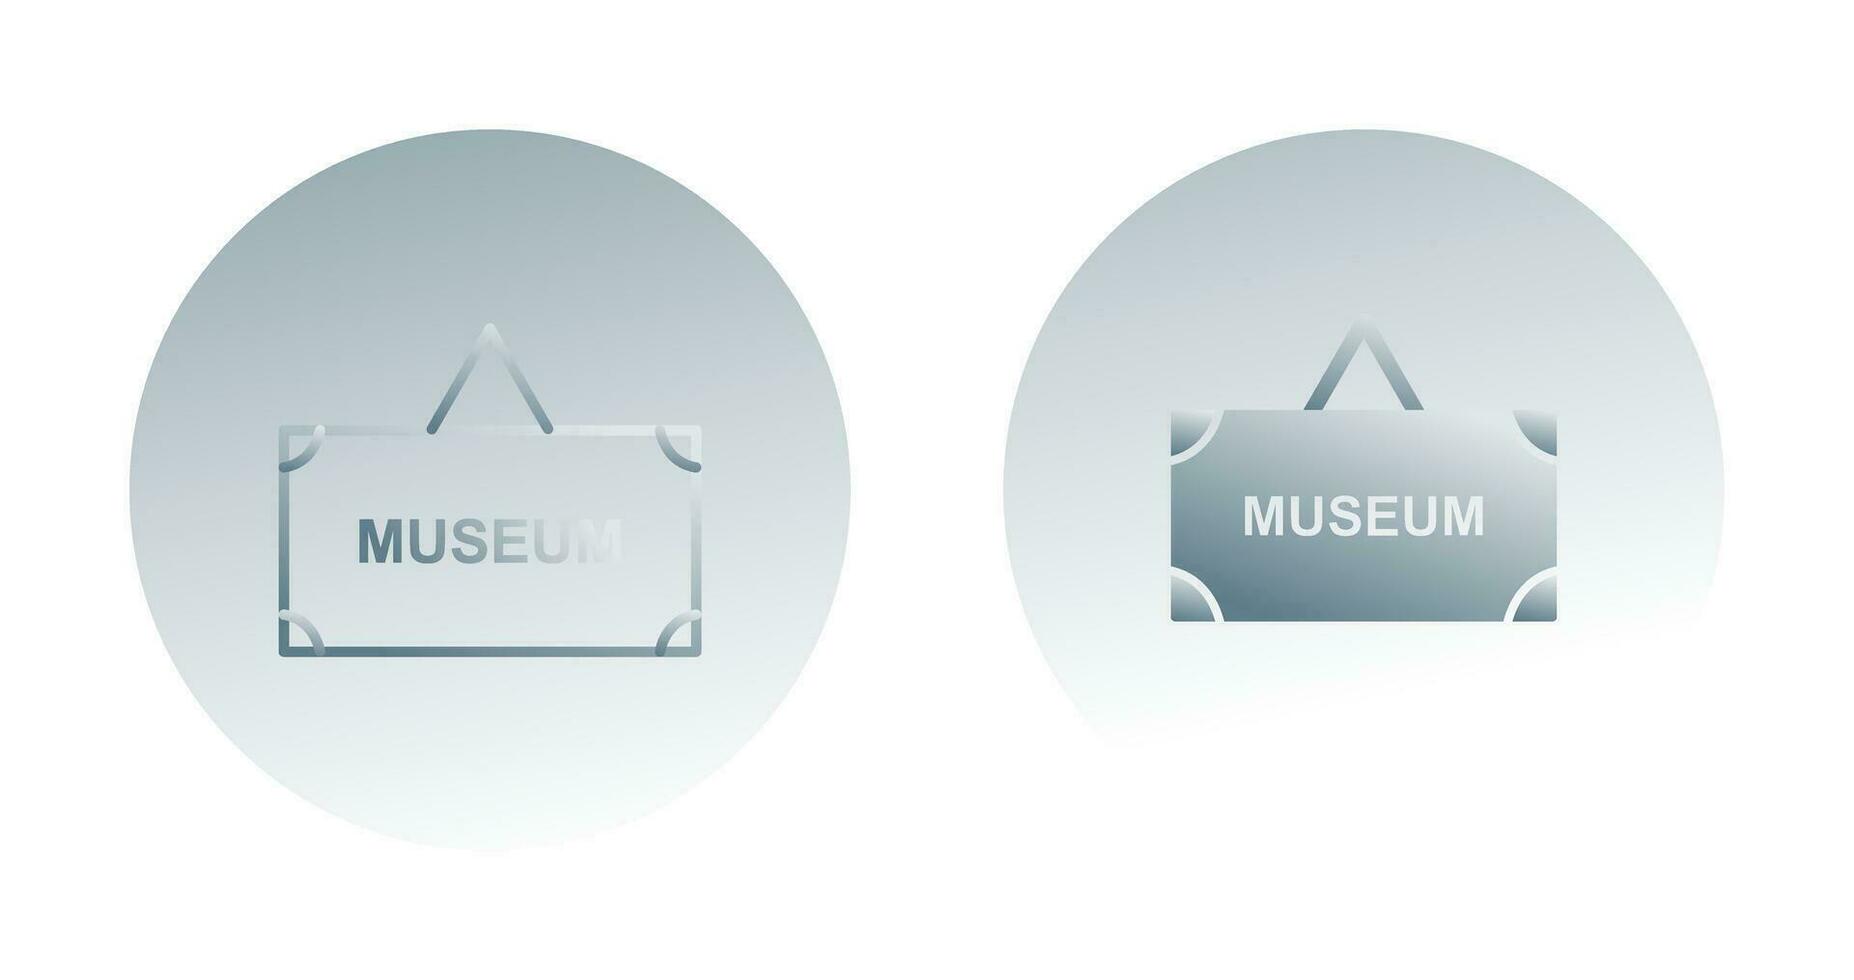 Museum-Tag-Vektor-Symbol vektor